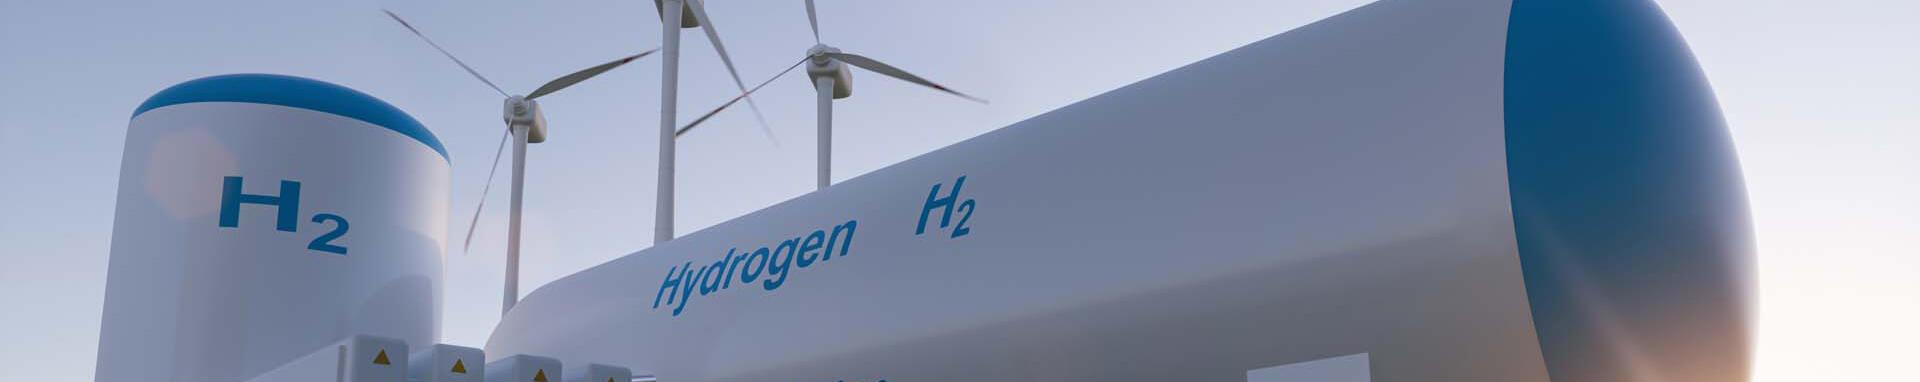 TAF: Supporting Green Hydrogen Through High Technology